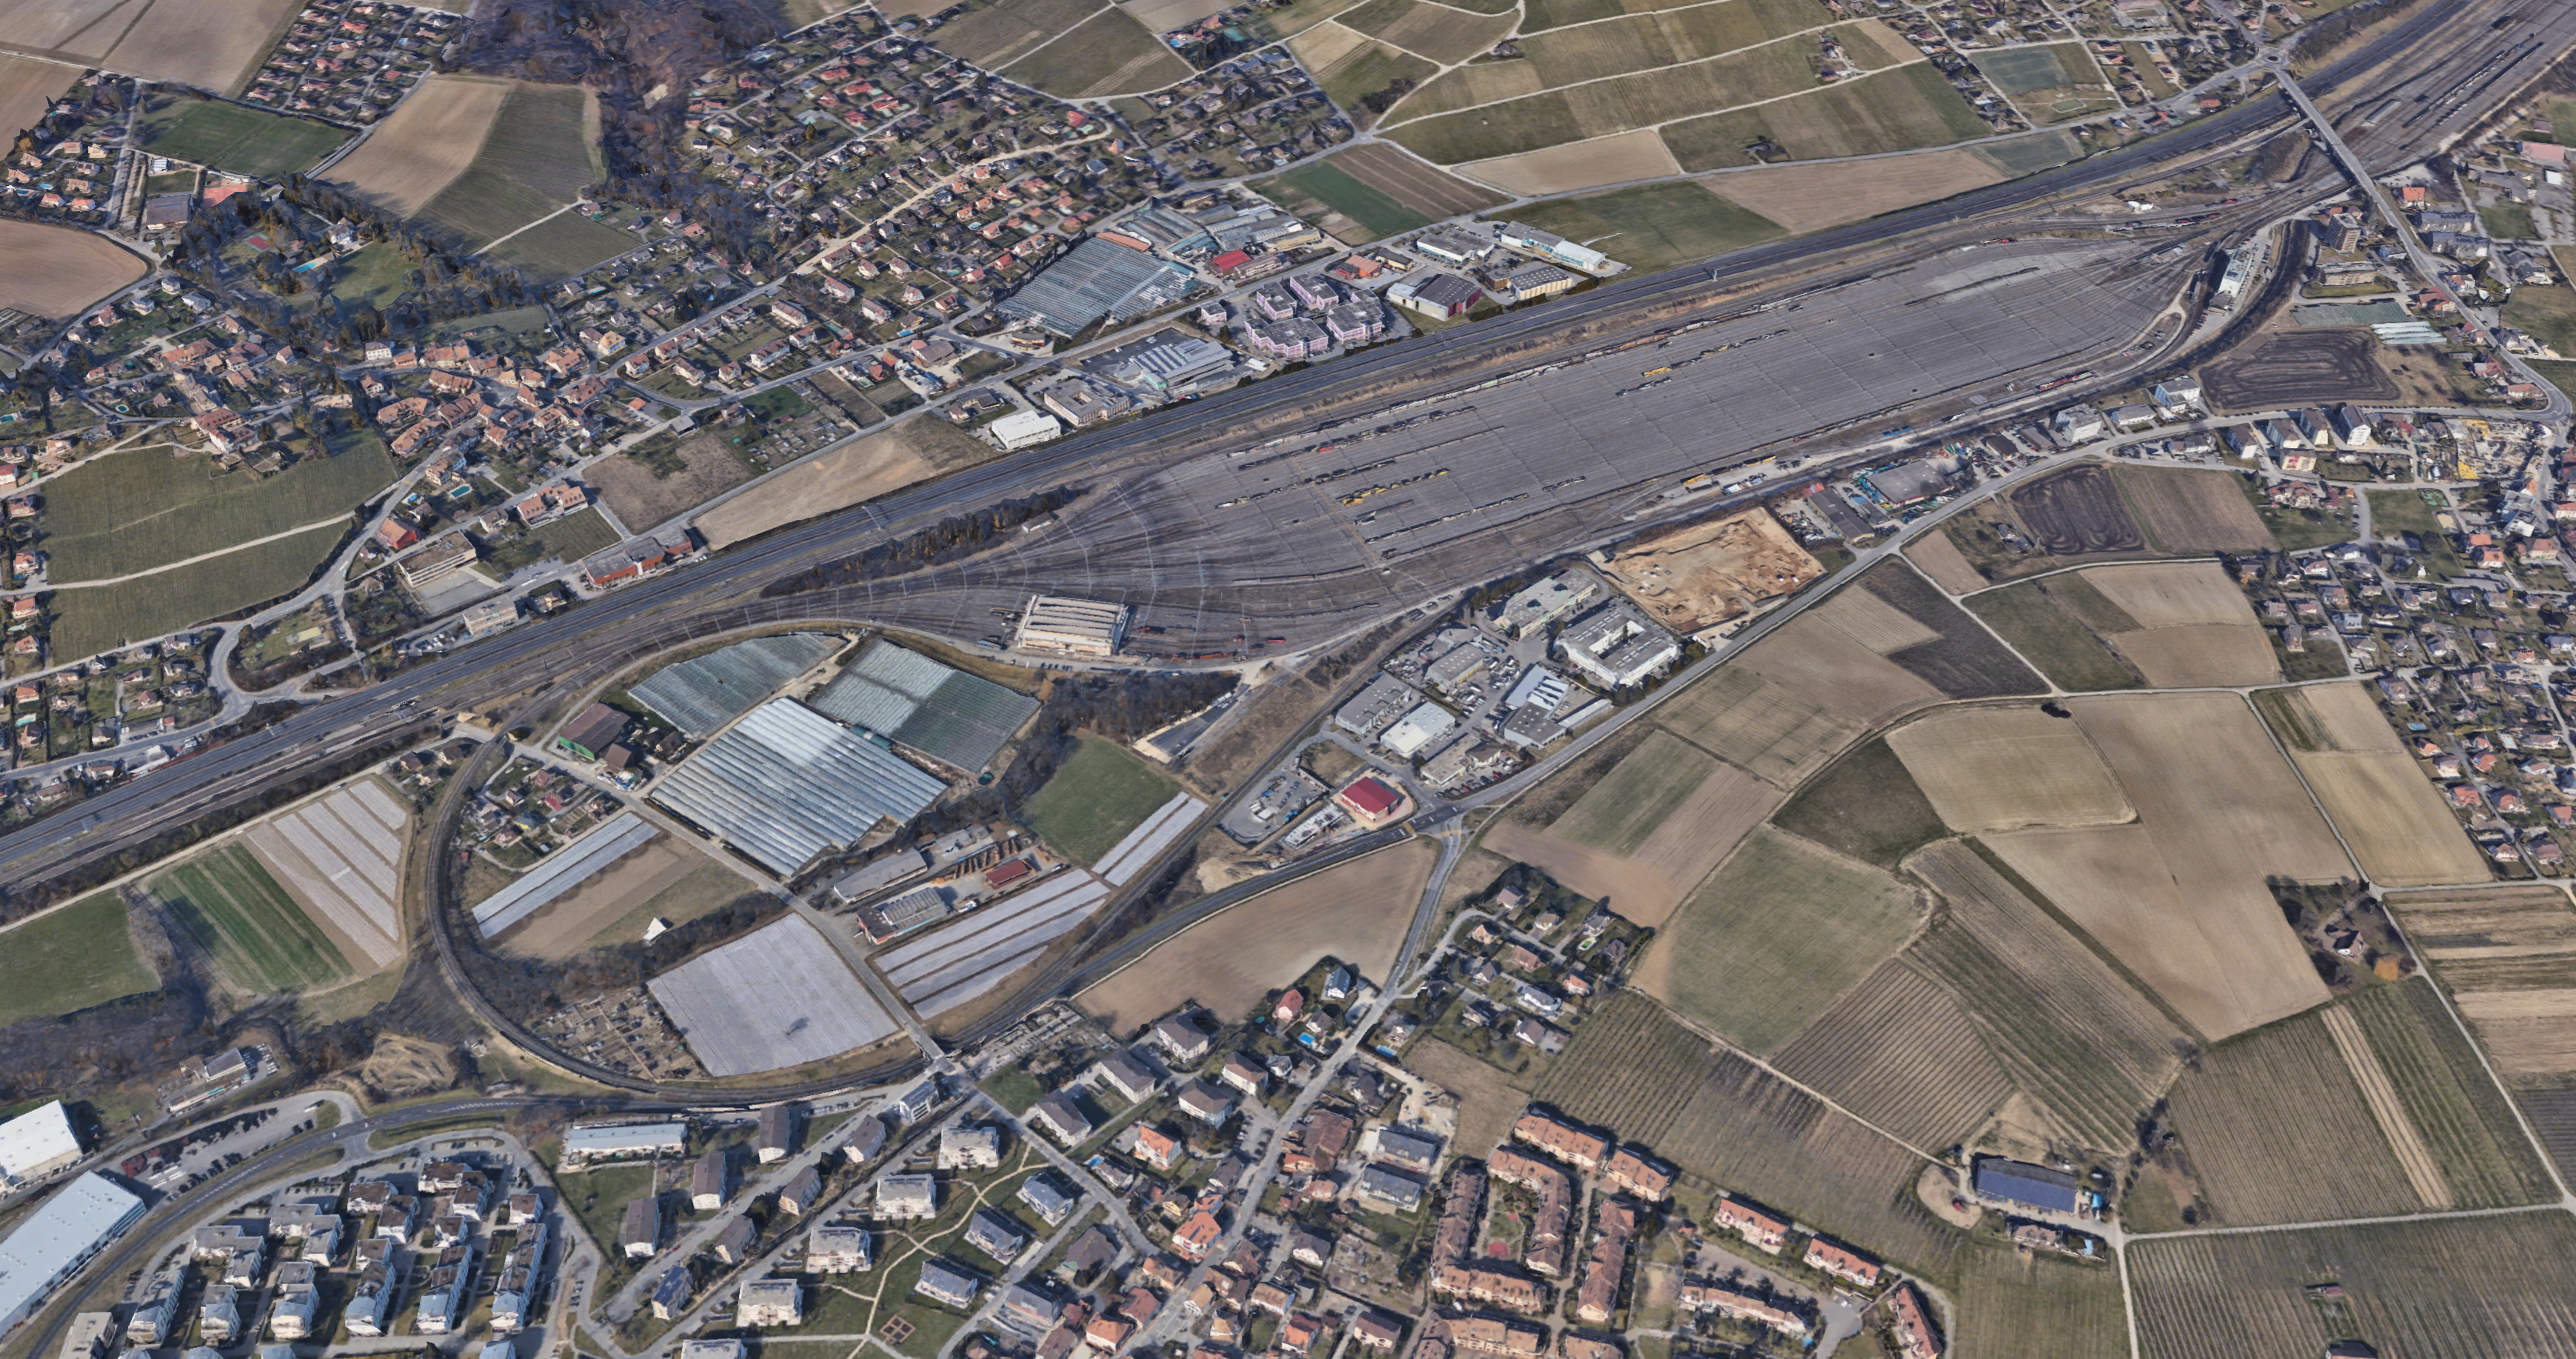 Gare de triage de Lausanne Google Earth